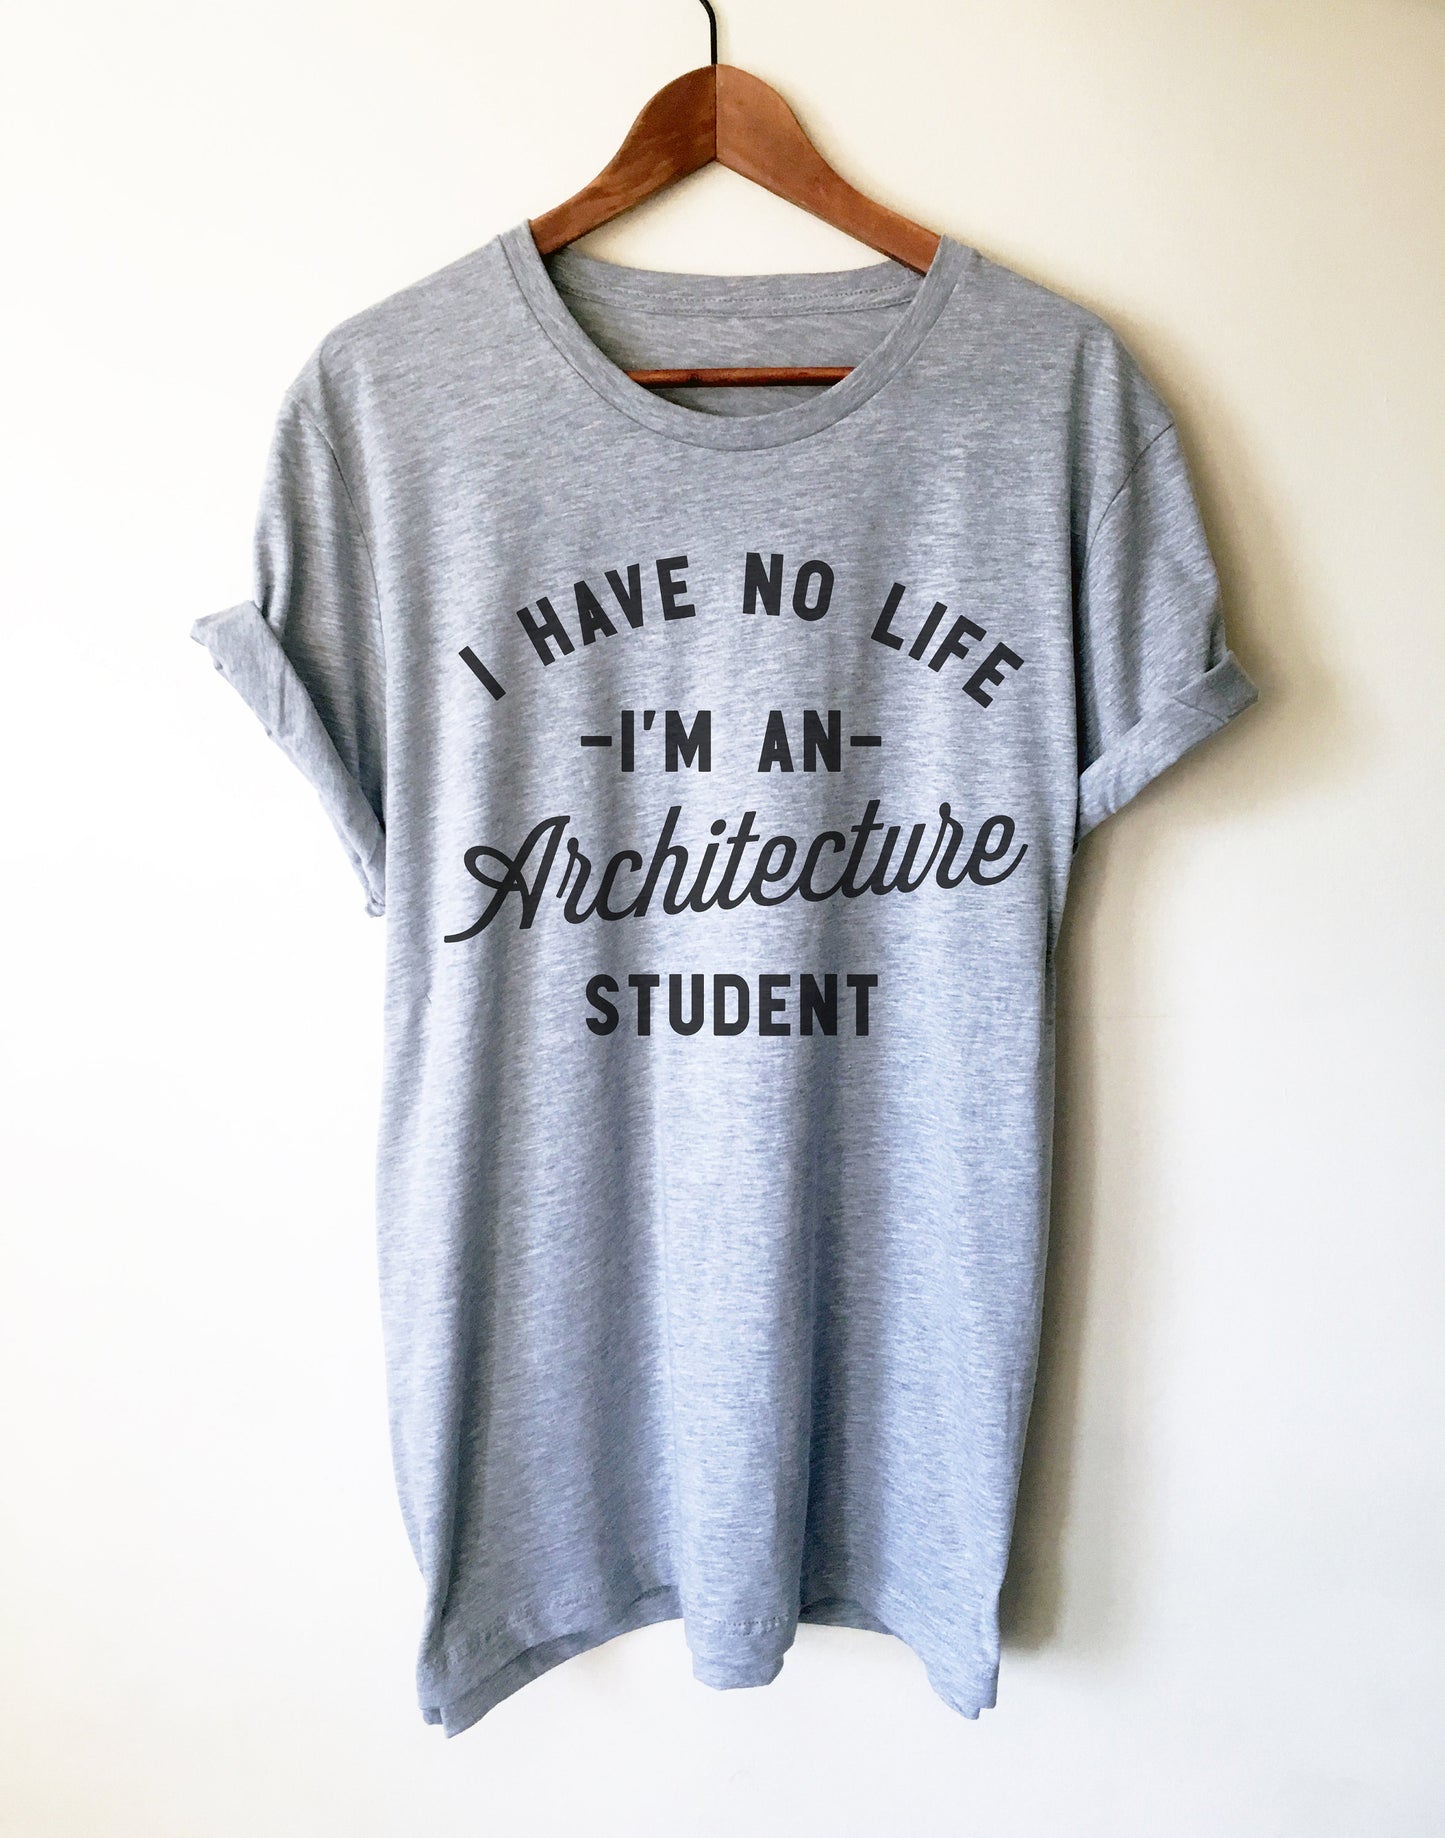 I’m An Architecture Student Unisex Shirt - Architect Shirt, Gift For Architect, Architecture, Architect, Architect Gift, Architecture Gifts